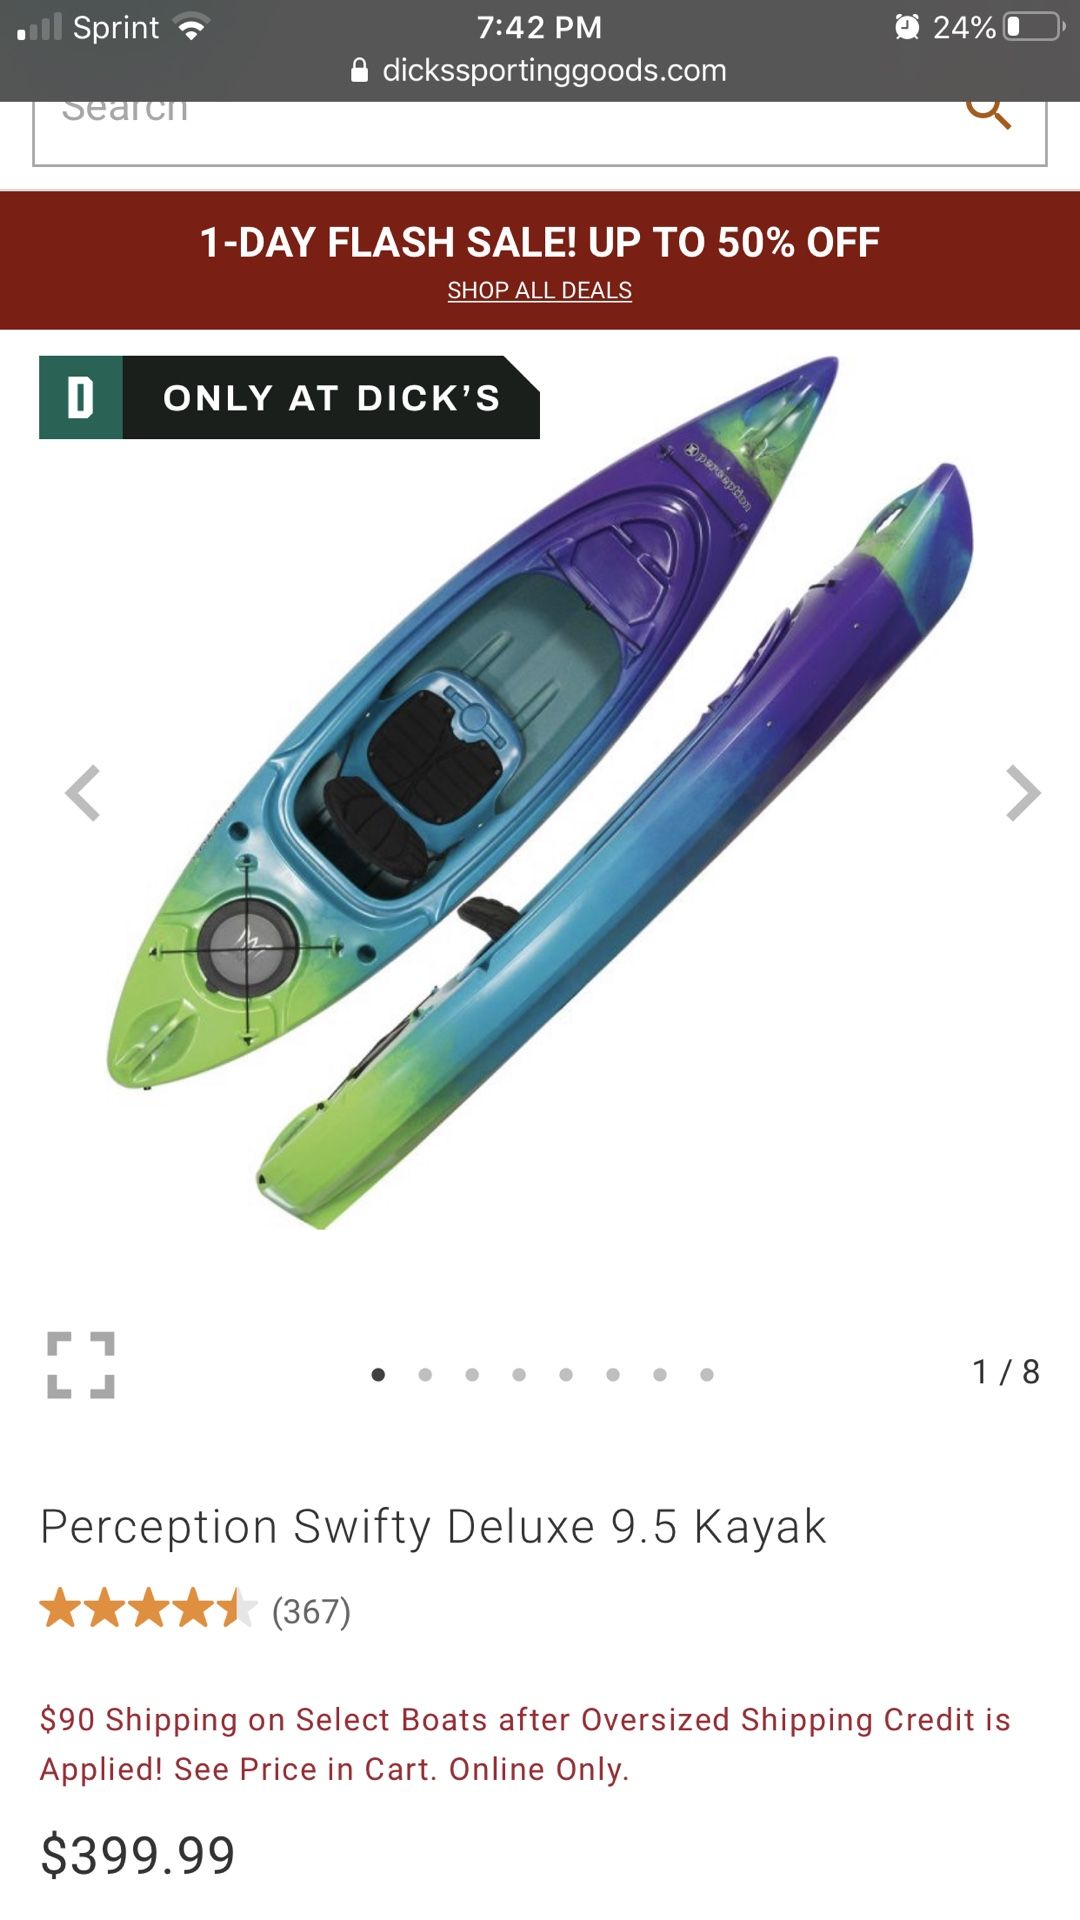 2 Kayaks Perception Swifty Deluxe.